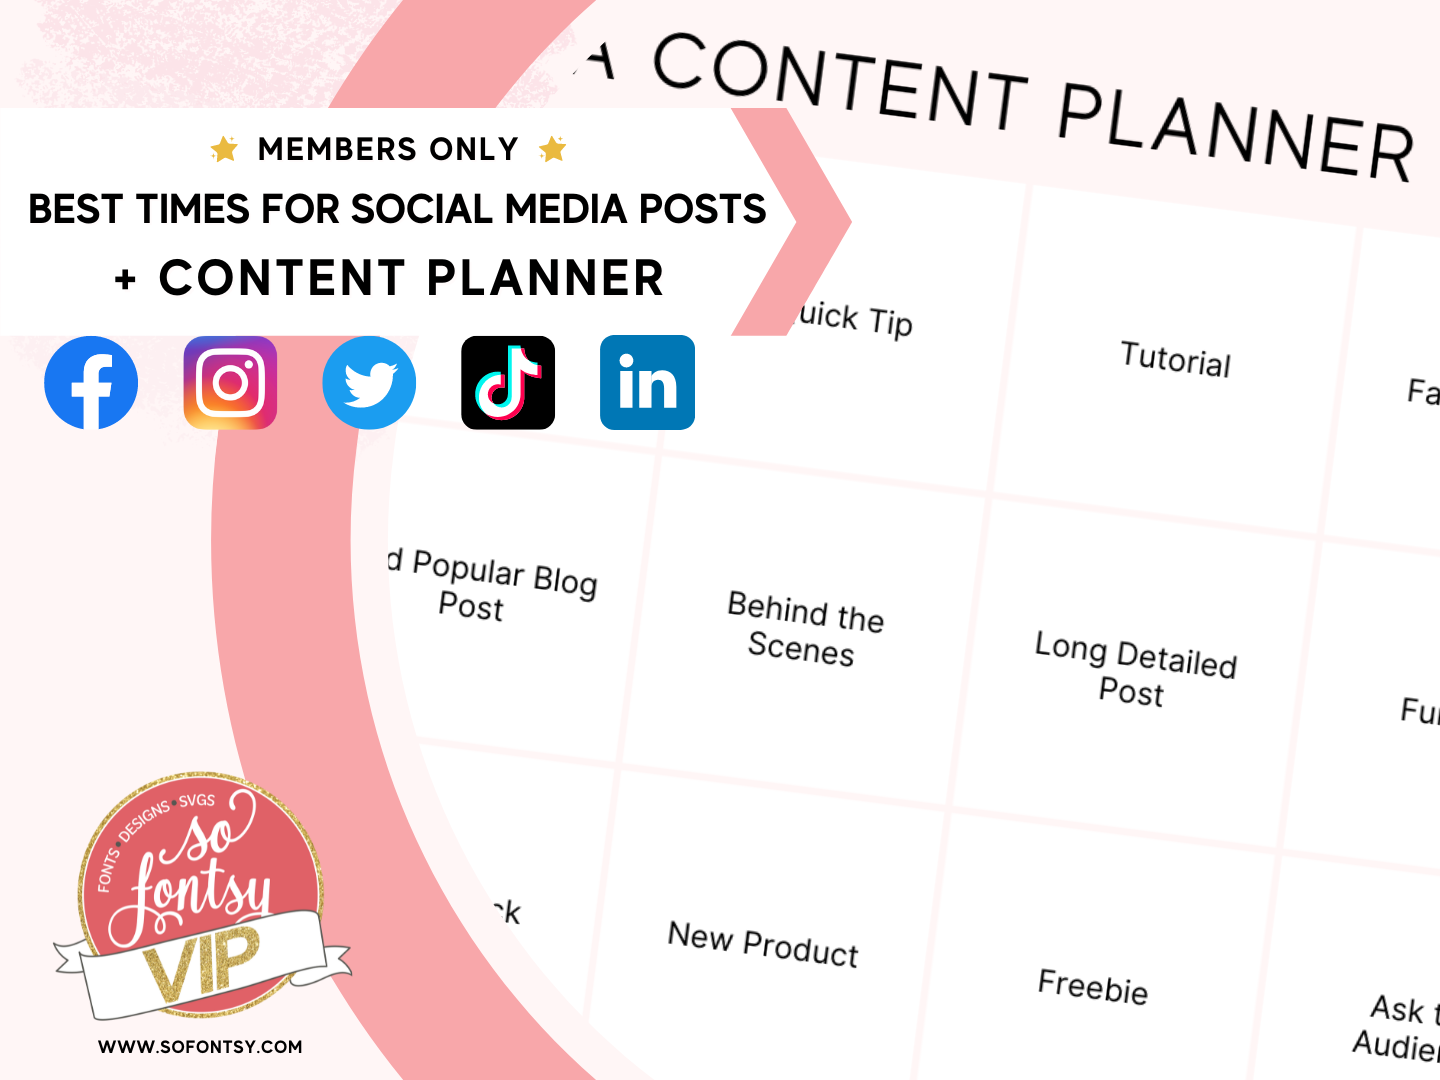 Social Media Content Planner So Fontsy VIP Resource